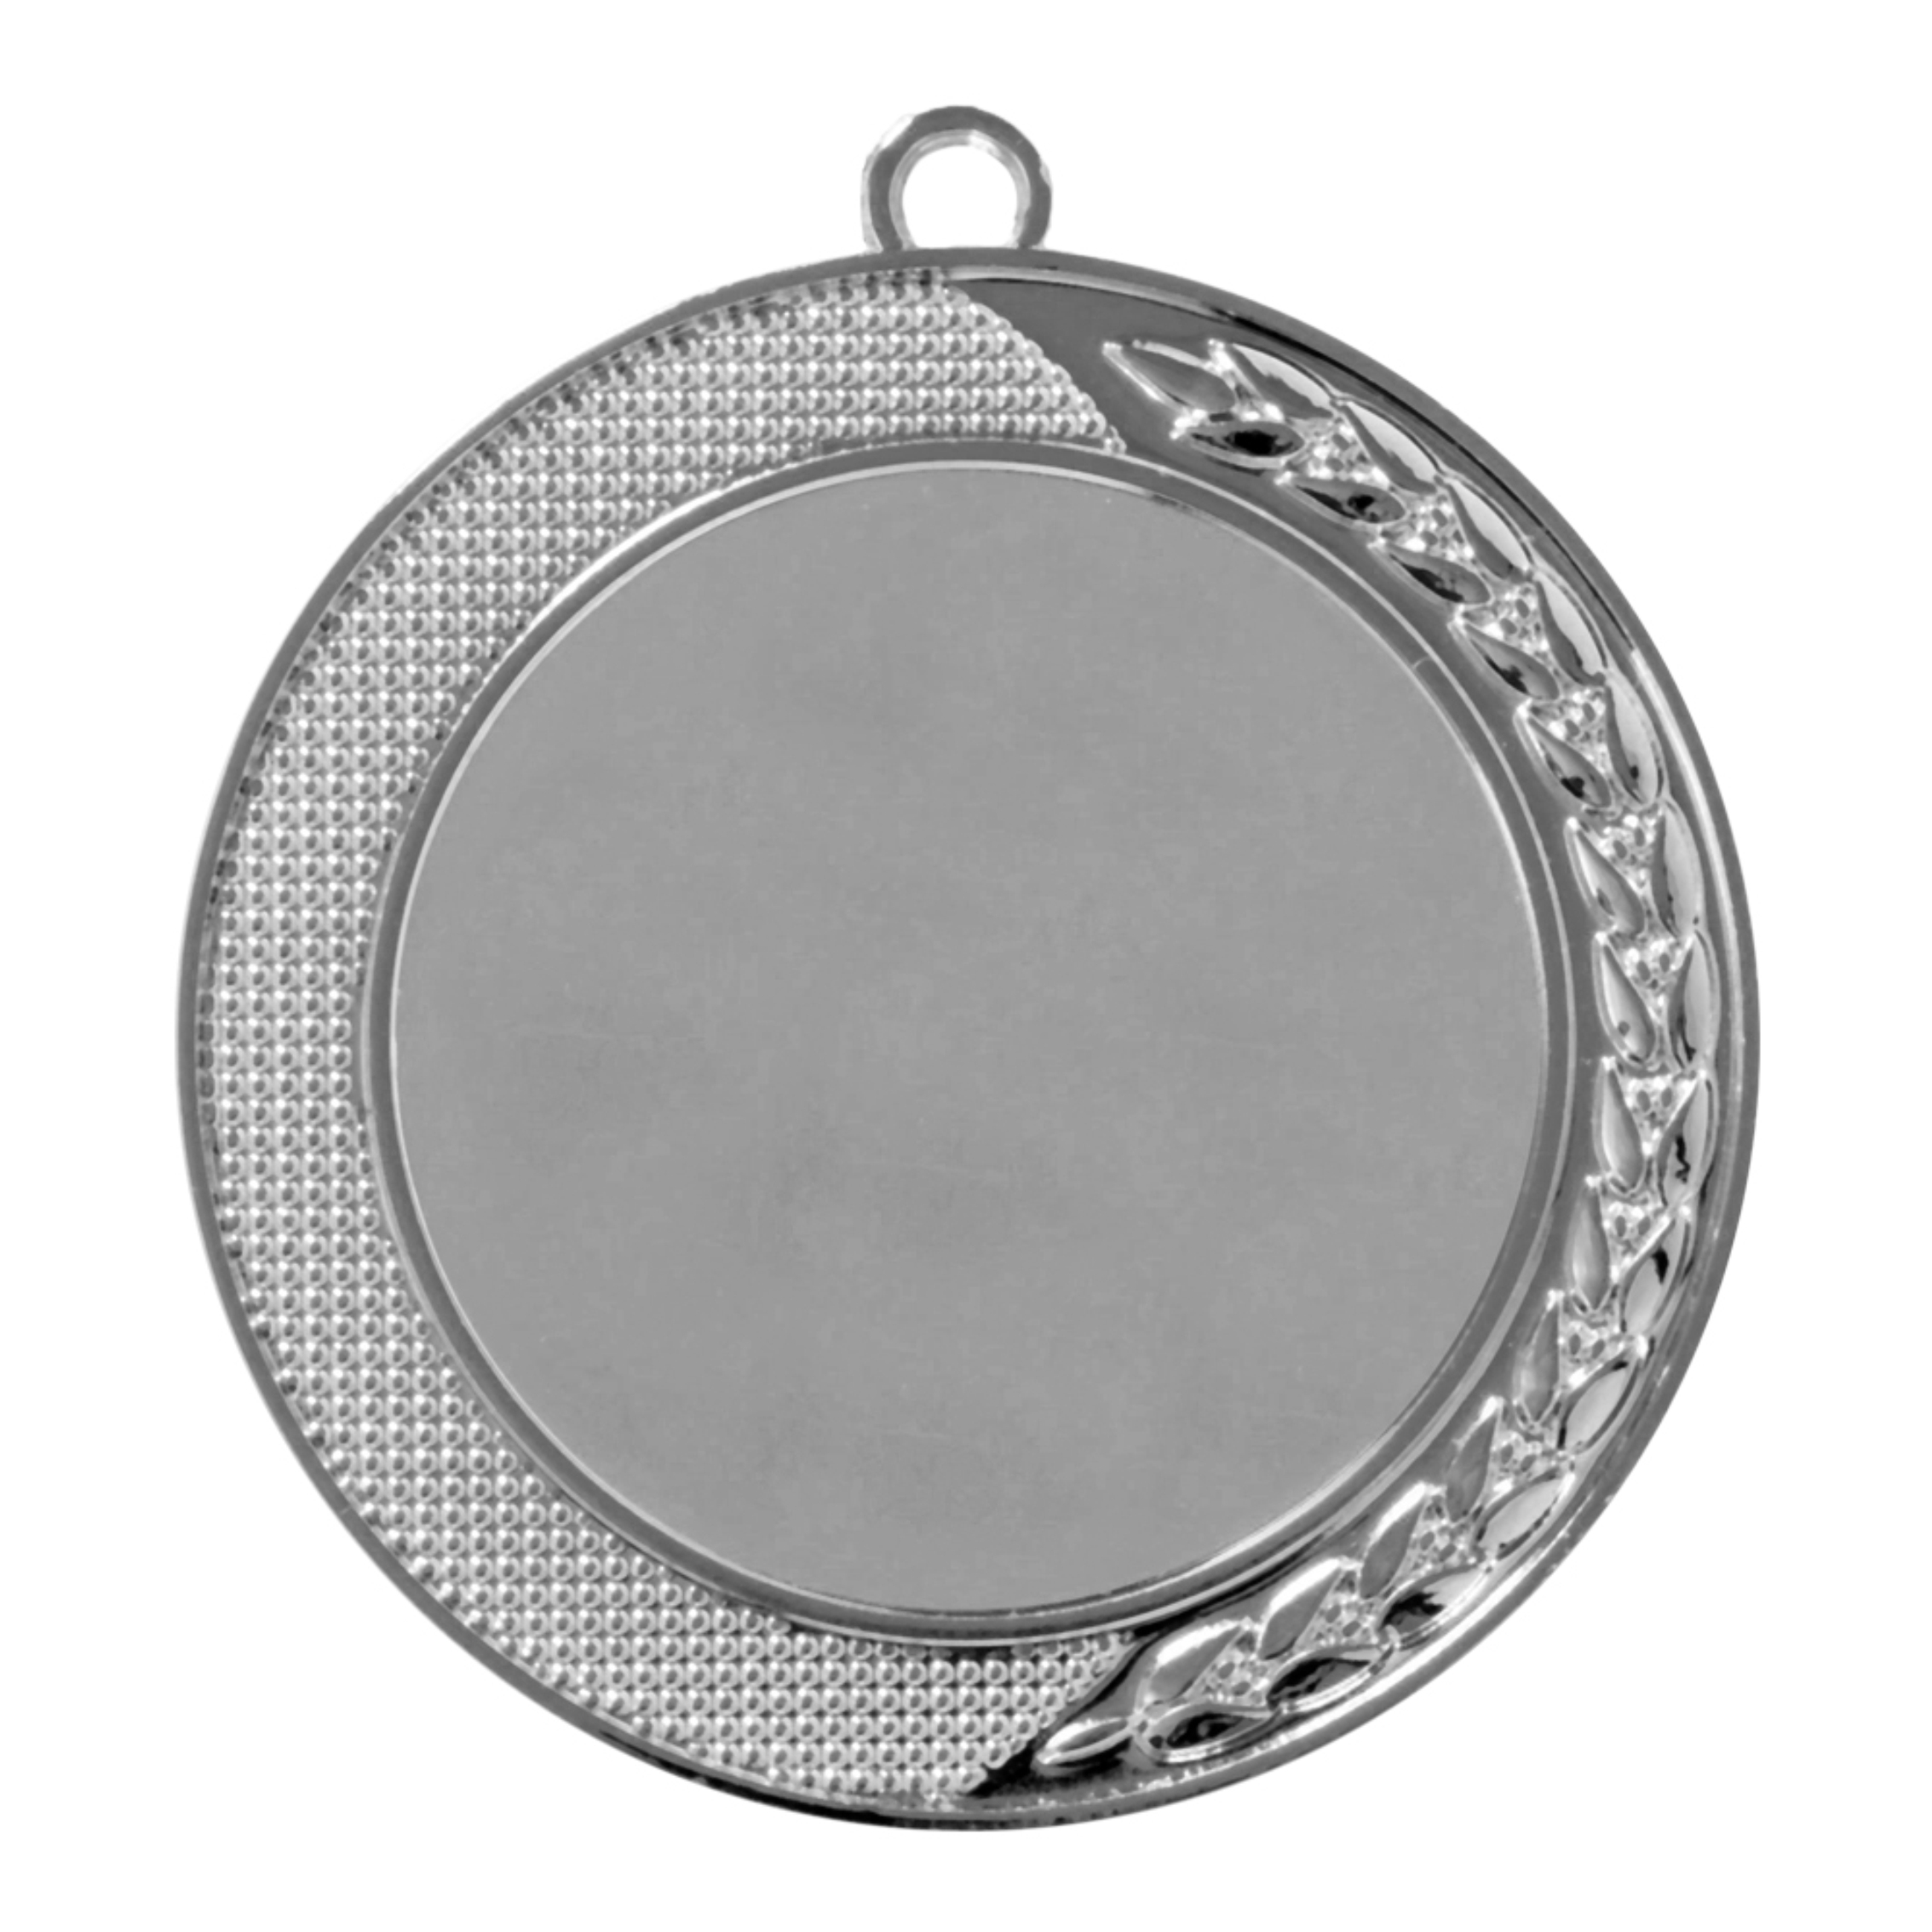 Zamak Medaille70mm Lieferbar in Gold-Silber - Bronze